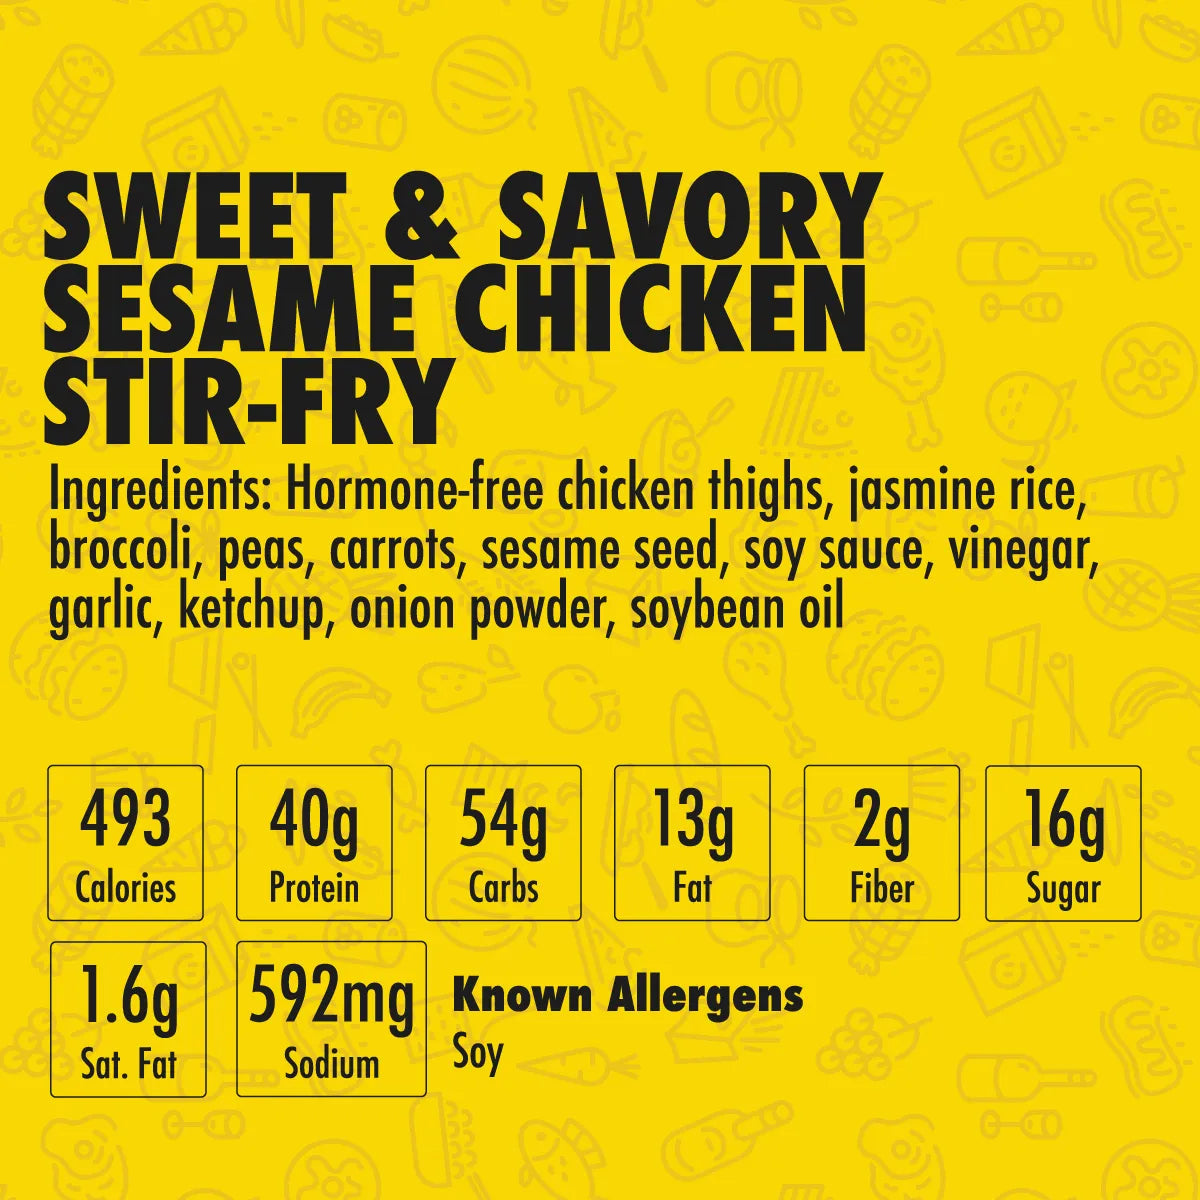 Sweet & Savory Sesame Chicken Stir-Fry